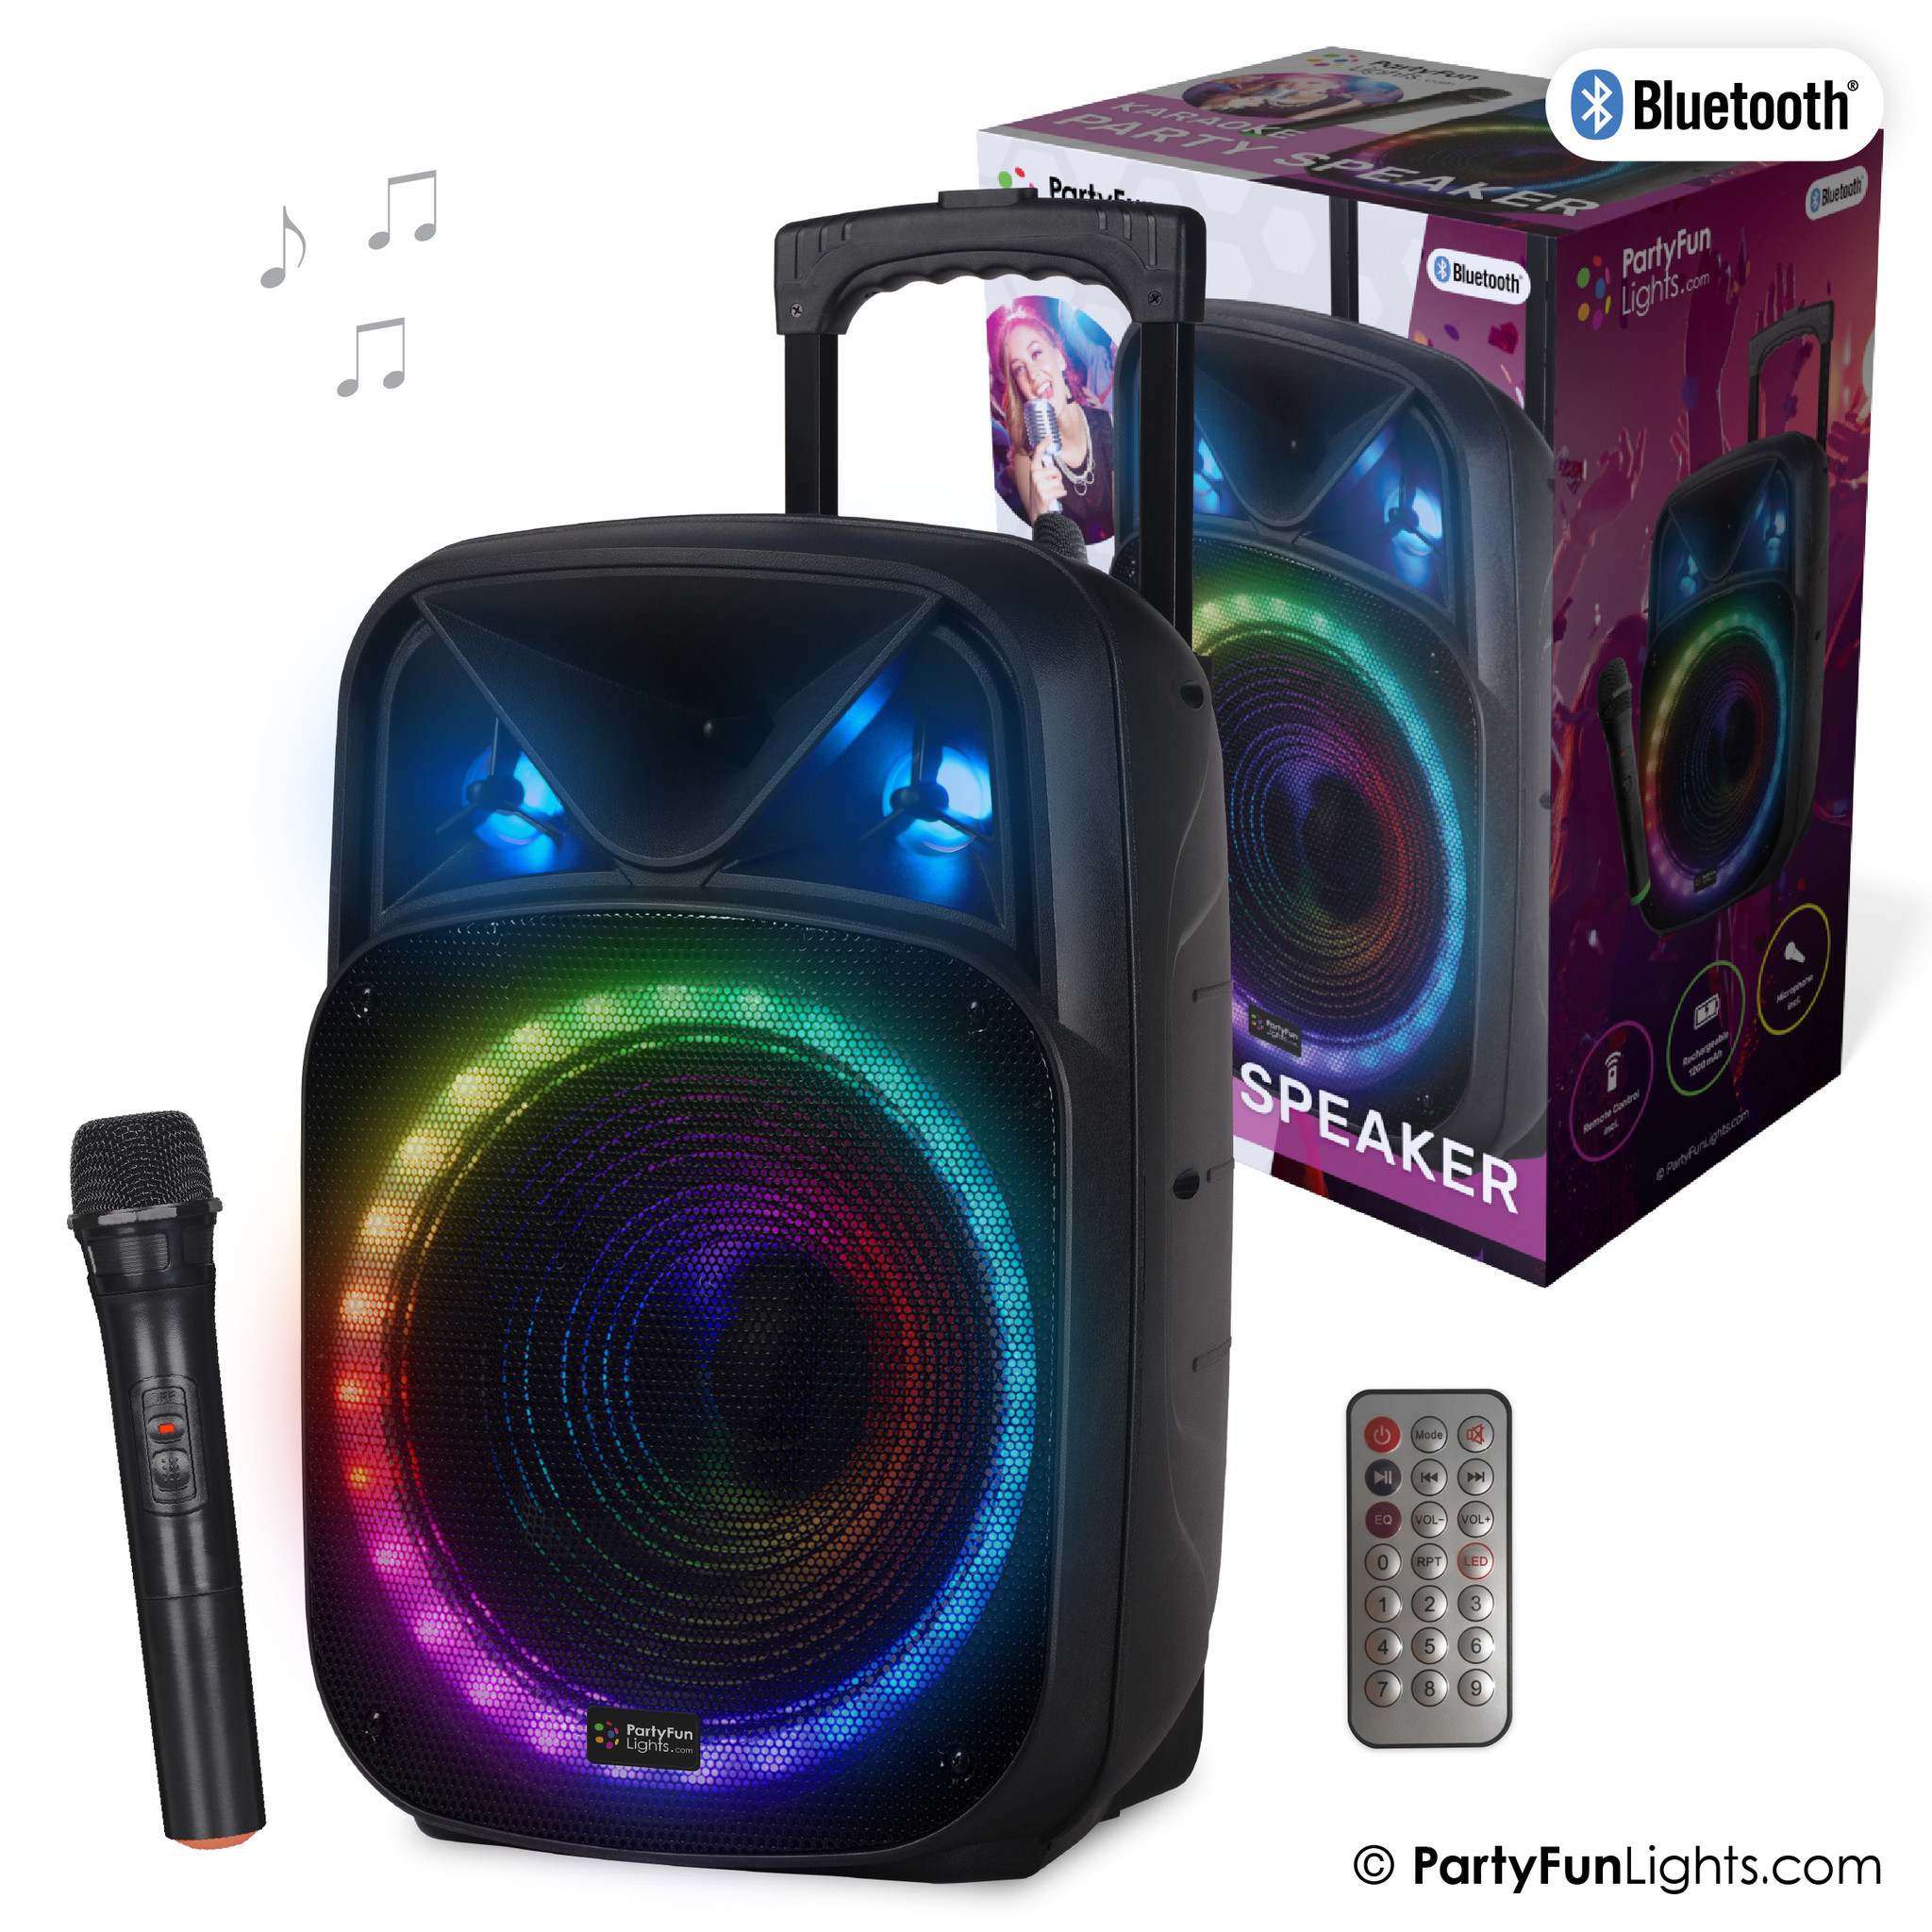 Altavoz Karaoke Bluetooth Neon Party 10W Coolsound - Viratel